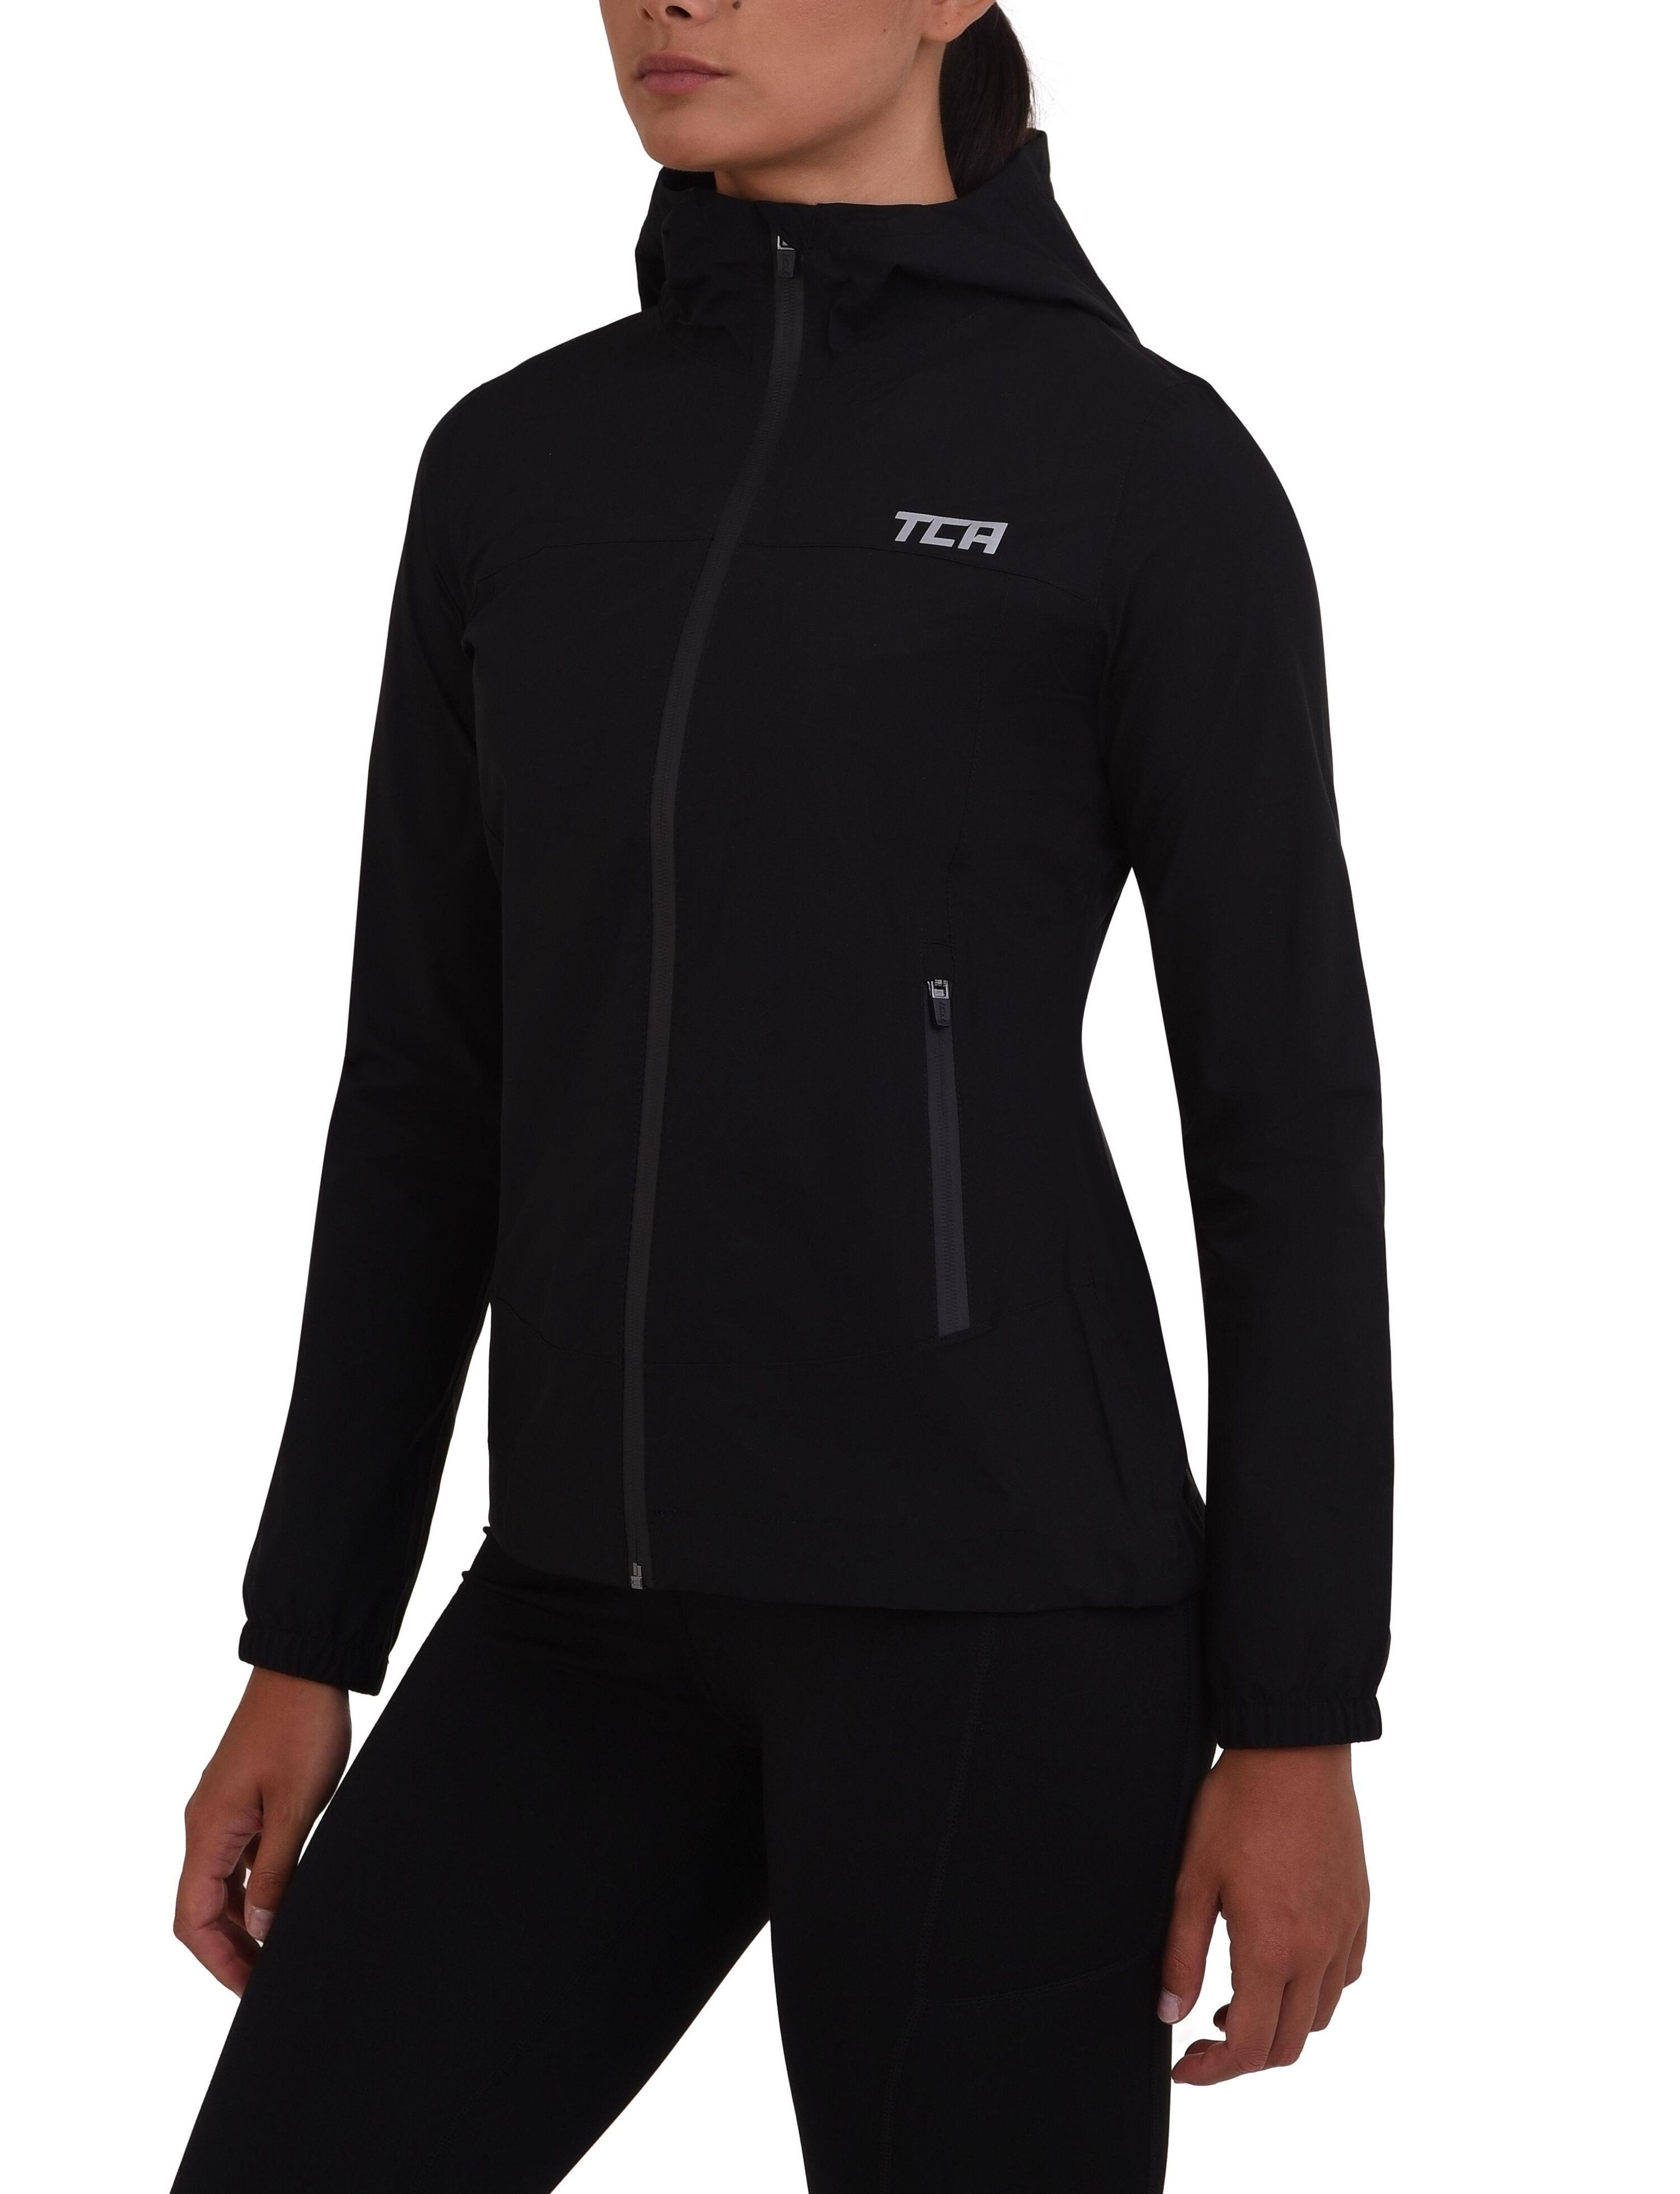 Women's AirLite Rain Jacket with Zip Pockets - Black 2/4